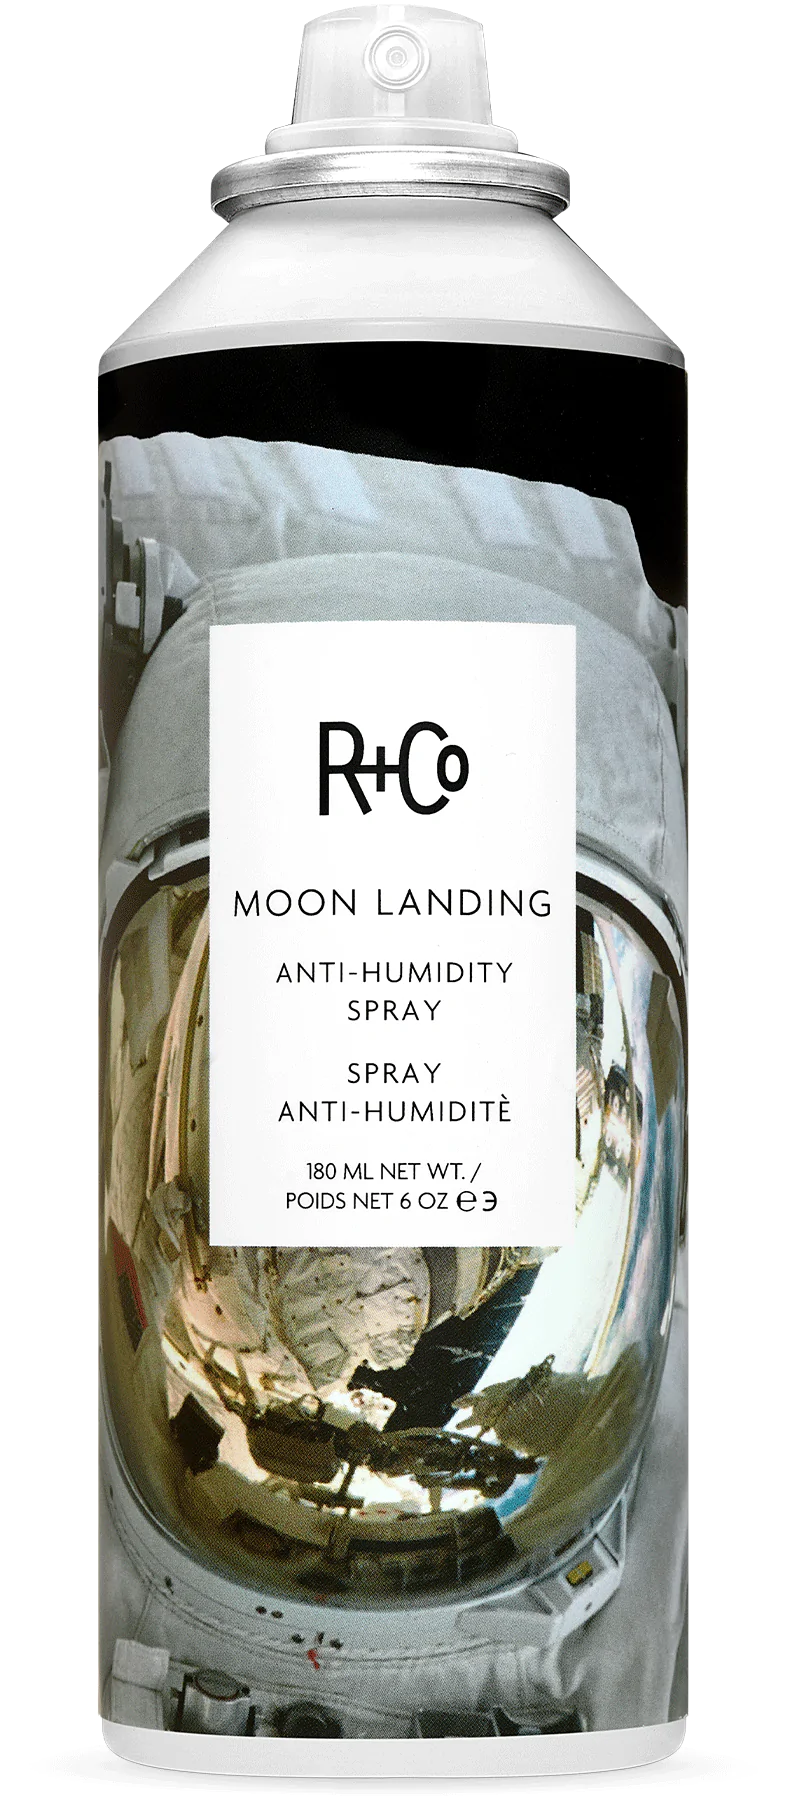 Moon Landing: Anti-Humidity